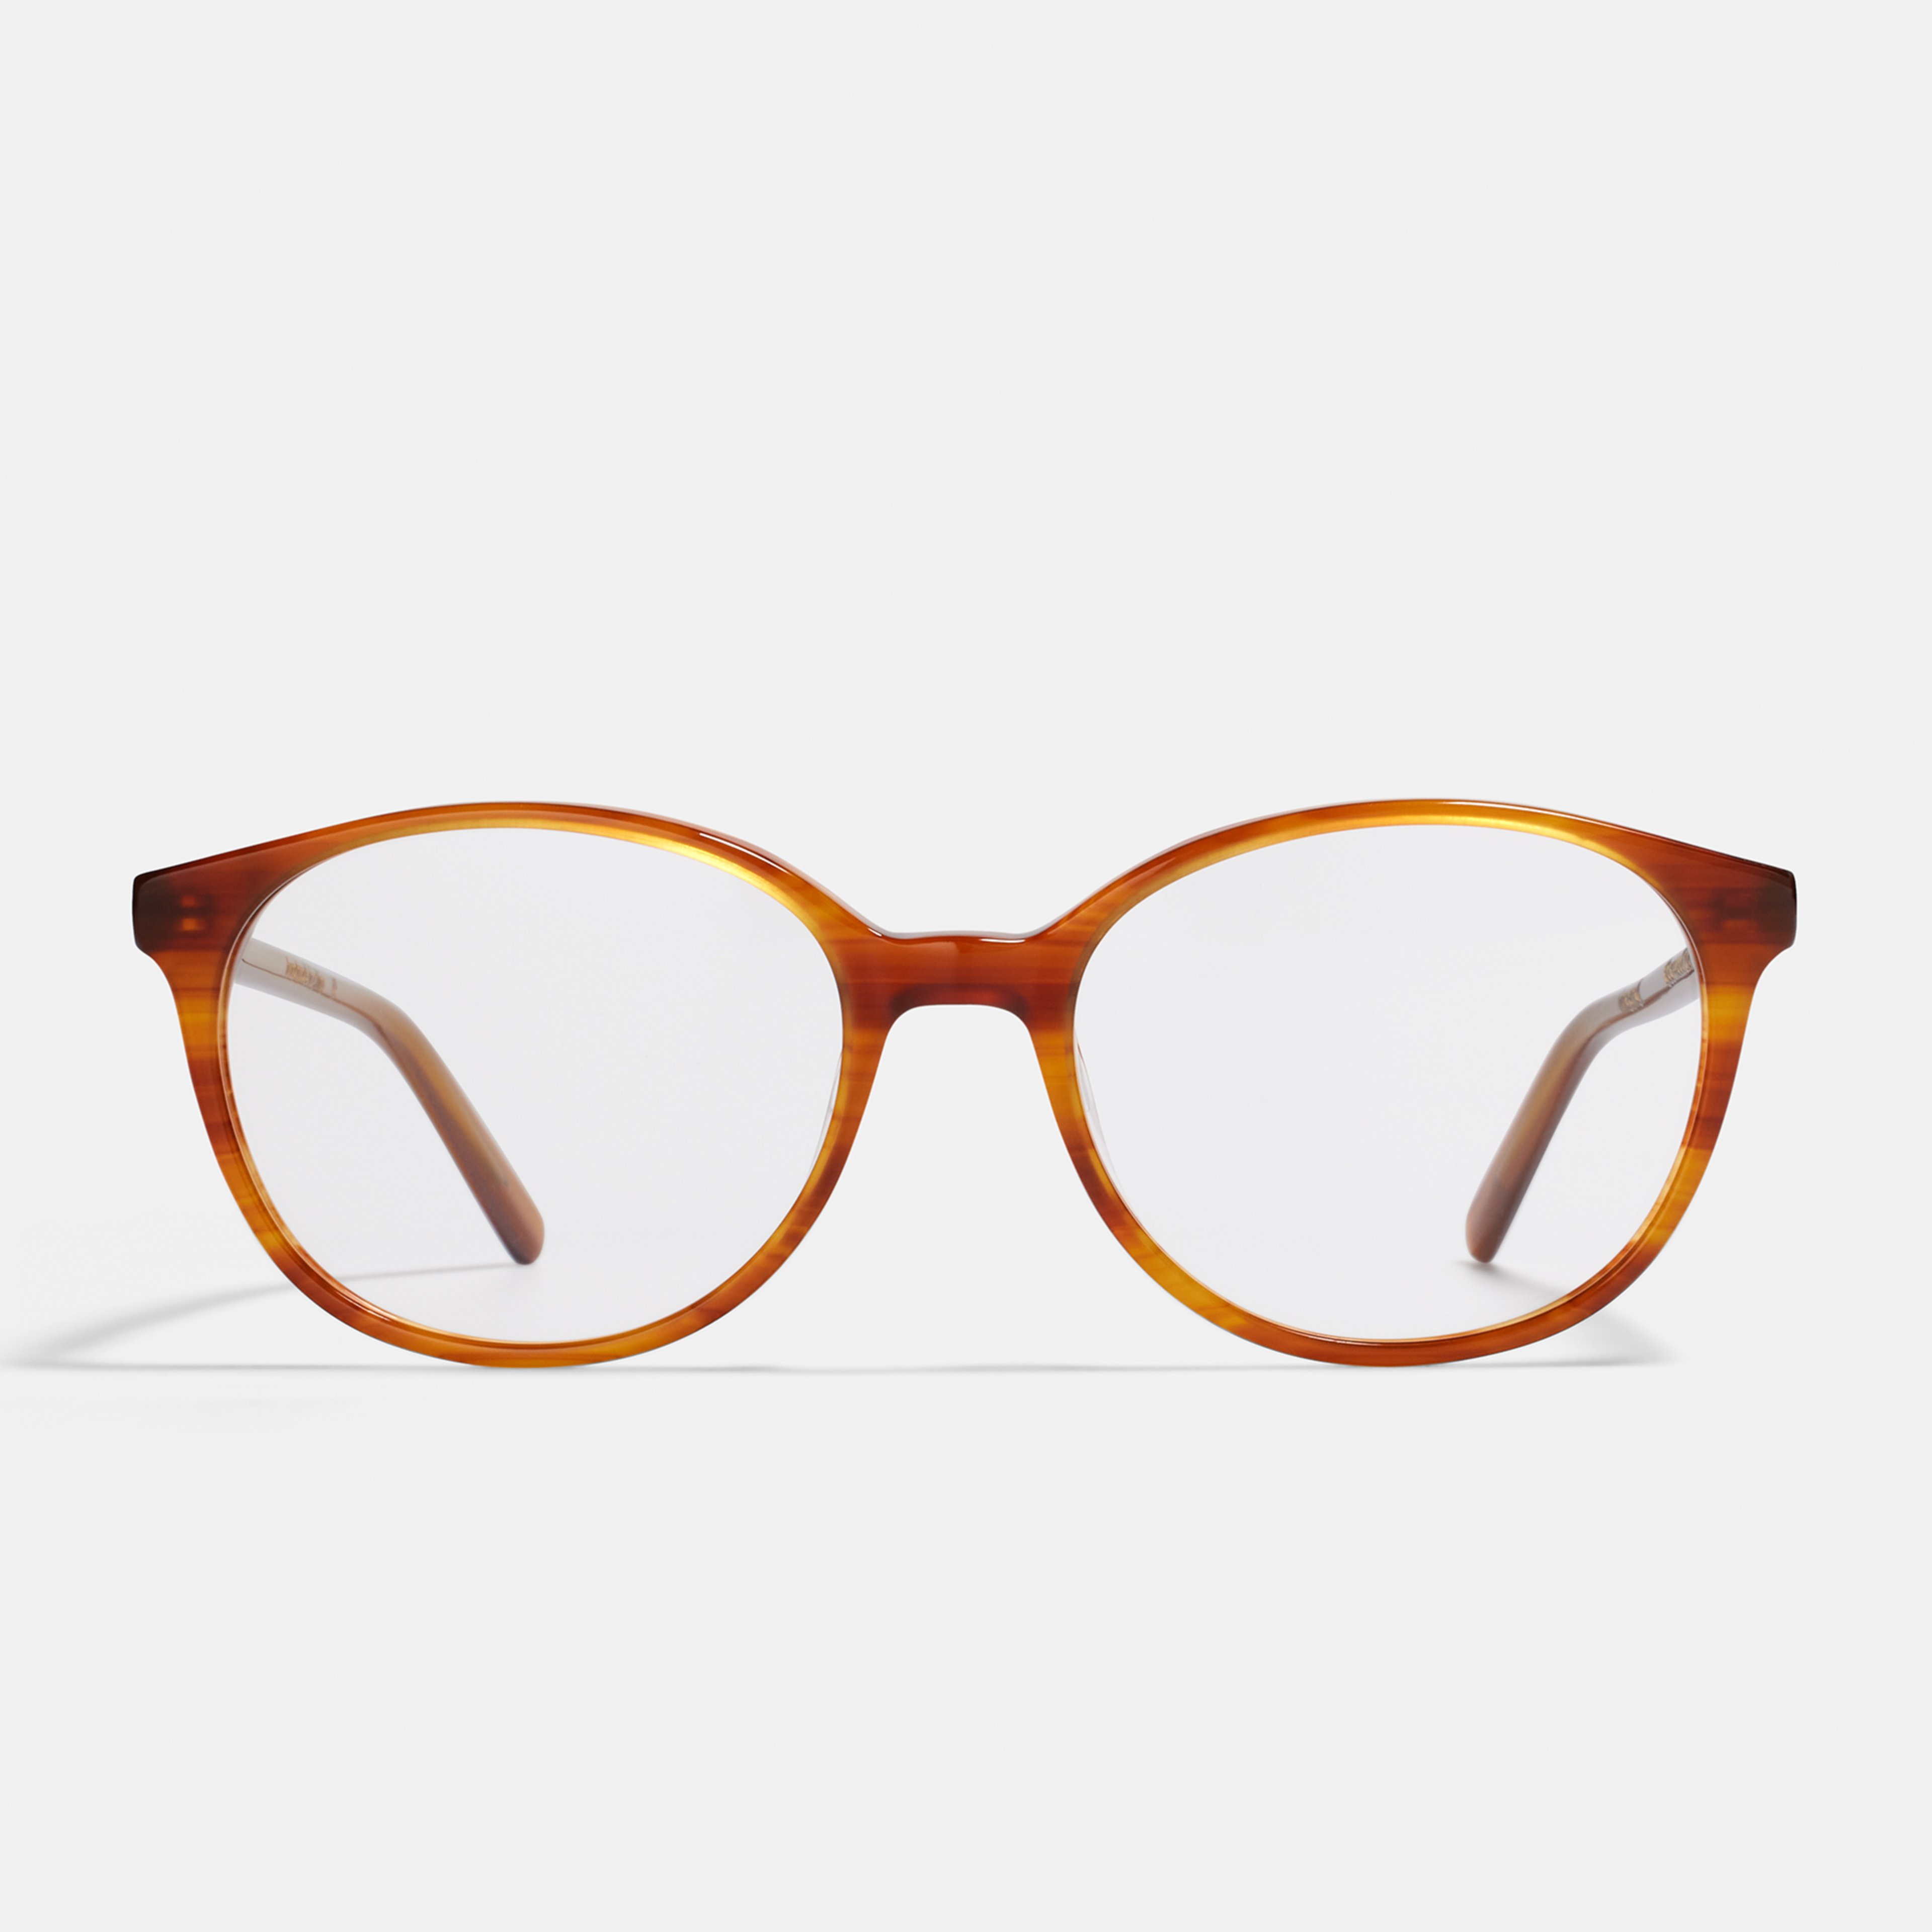 Ace & Tate Gafas | oval Acetato in Marrón, Naranja